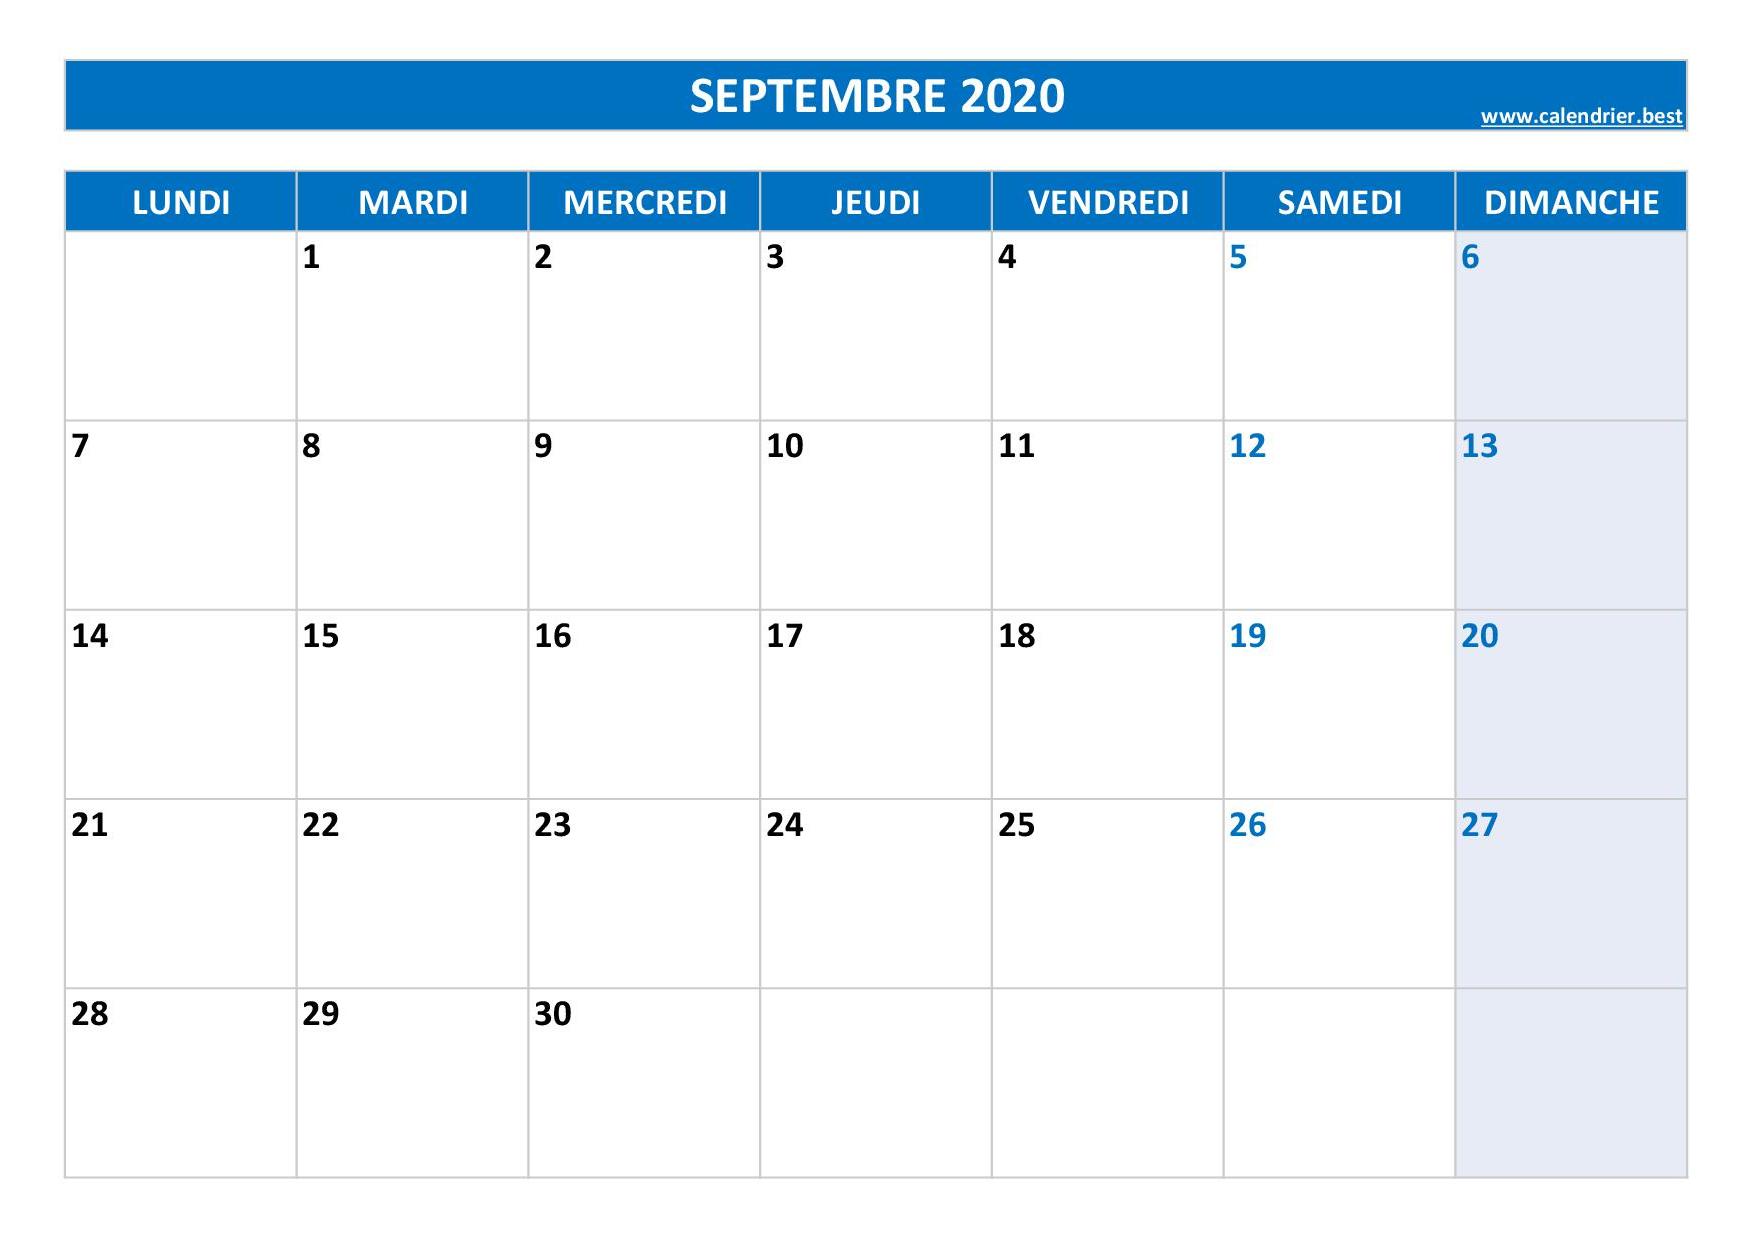 Calendrier Septembre 2020 à consulter ou imprimer -Calendrier.best